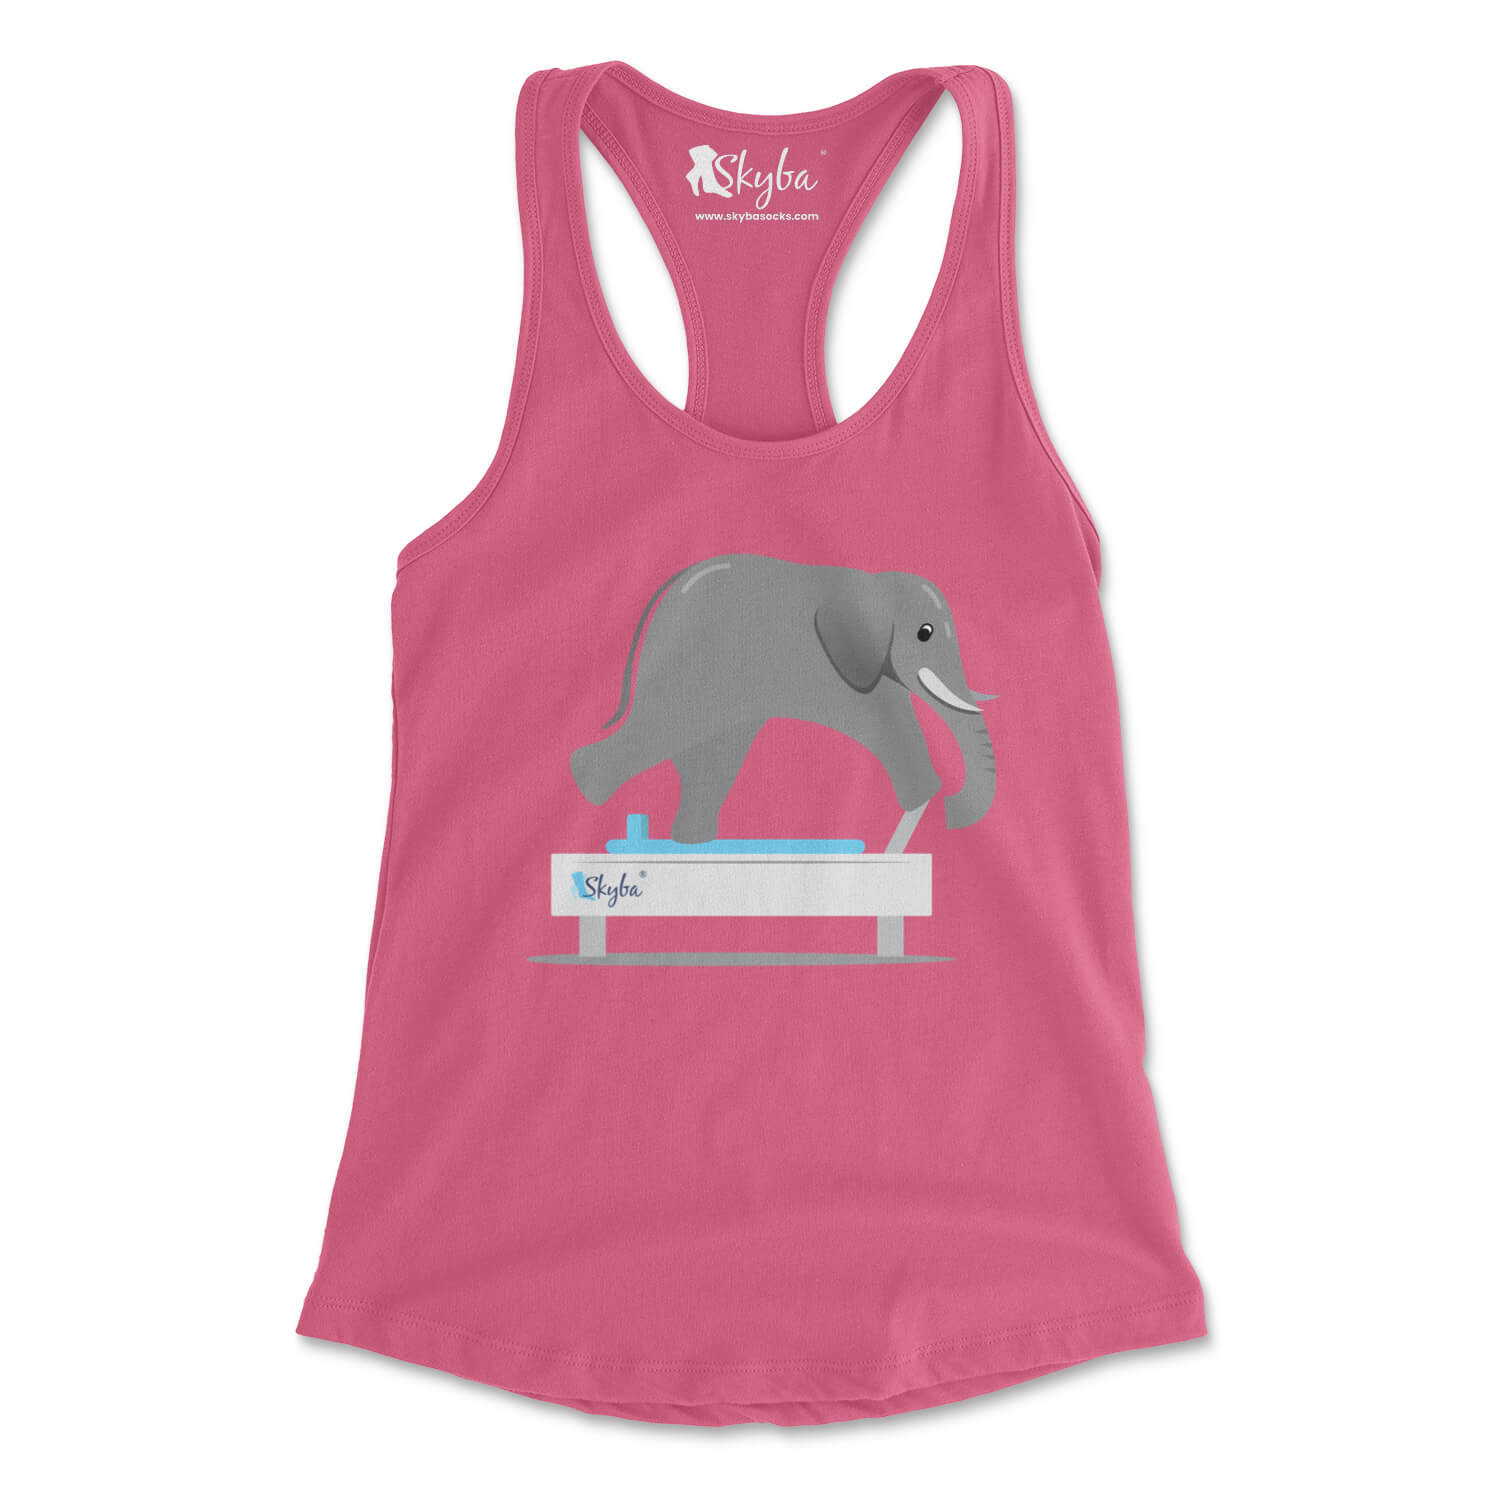 Elephant on Reformer - Women's Slim Fit Tank Skyba Tank Top